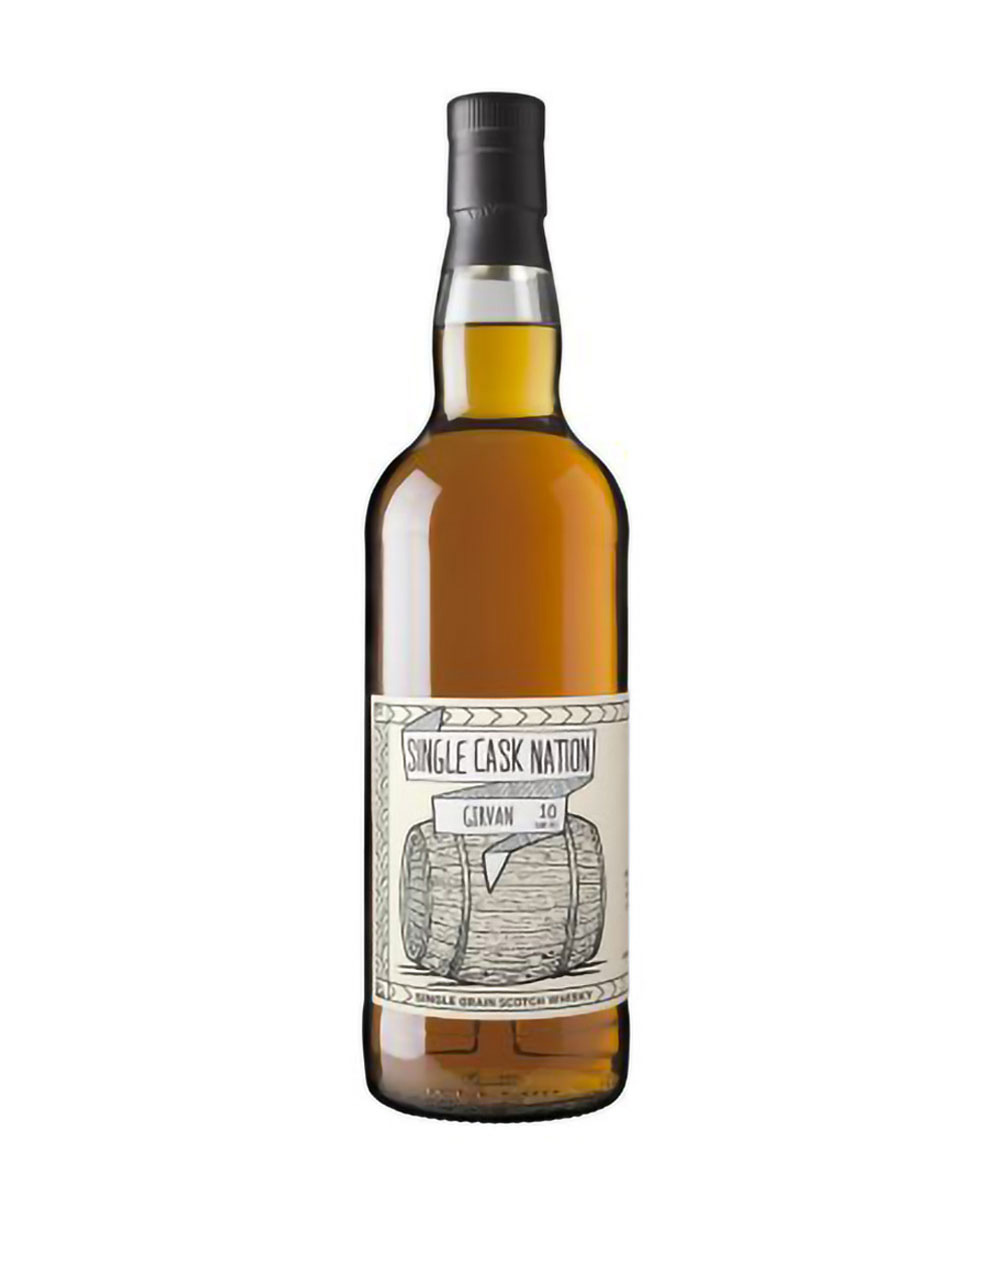 Single Cask Nation Girvan 10 Year Old Single Grain Scotch Whisky